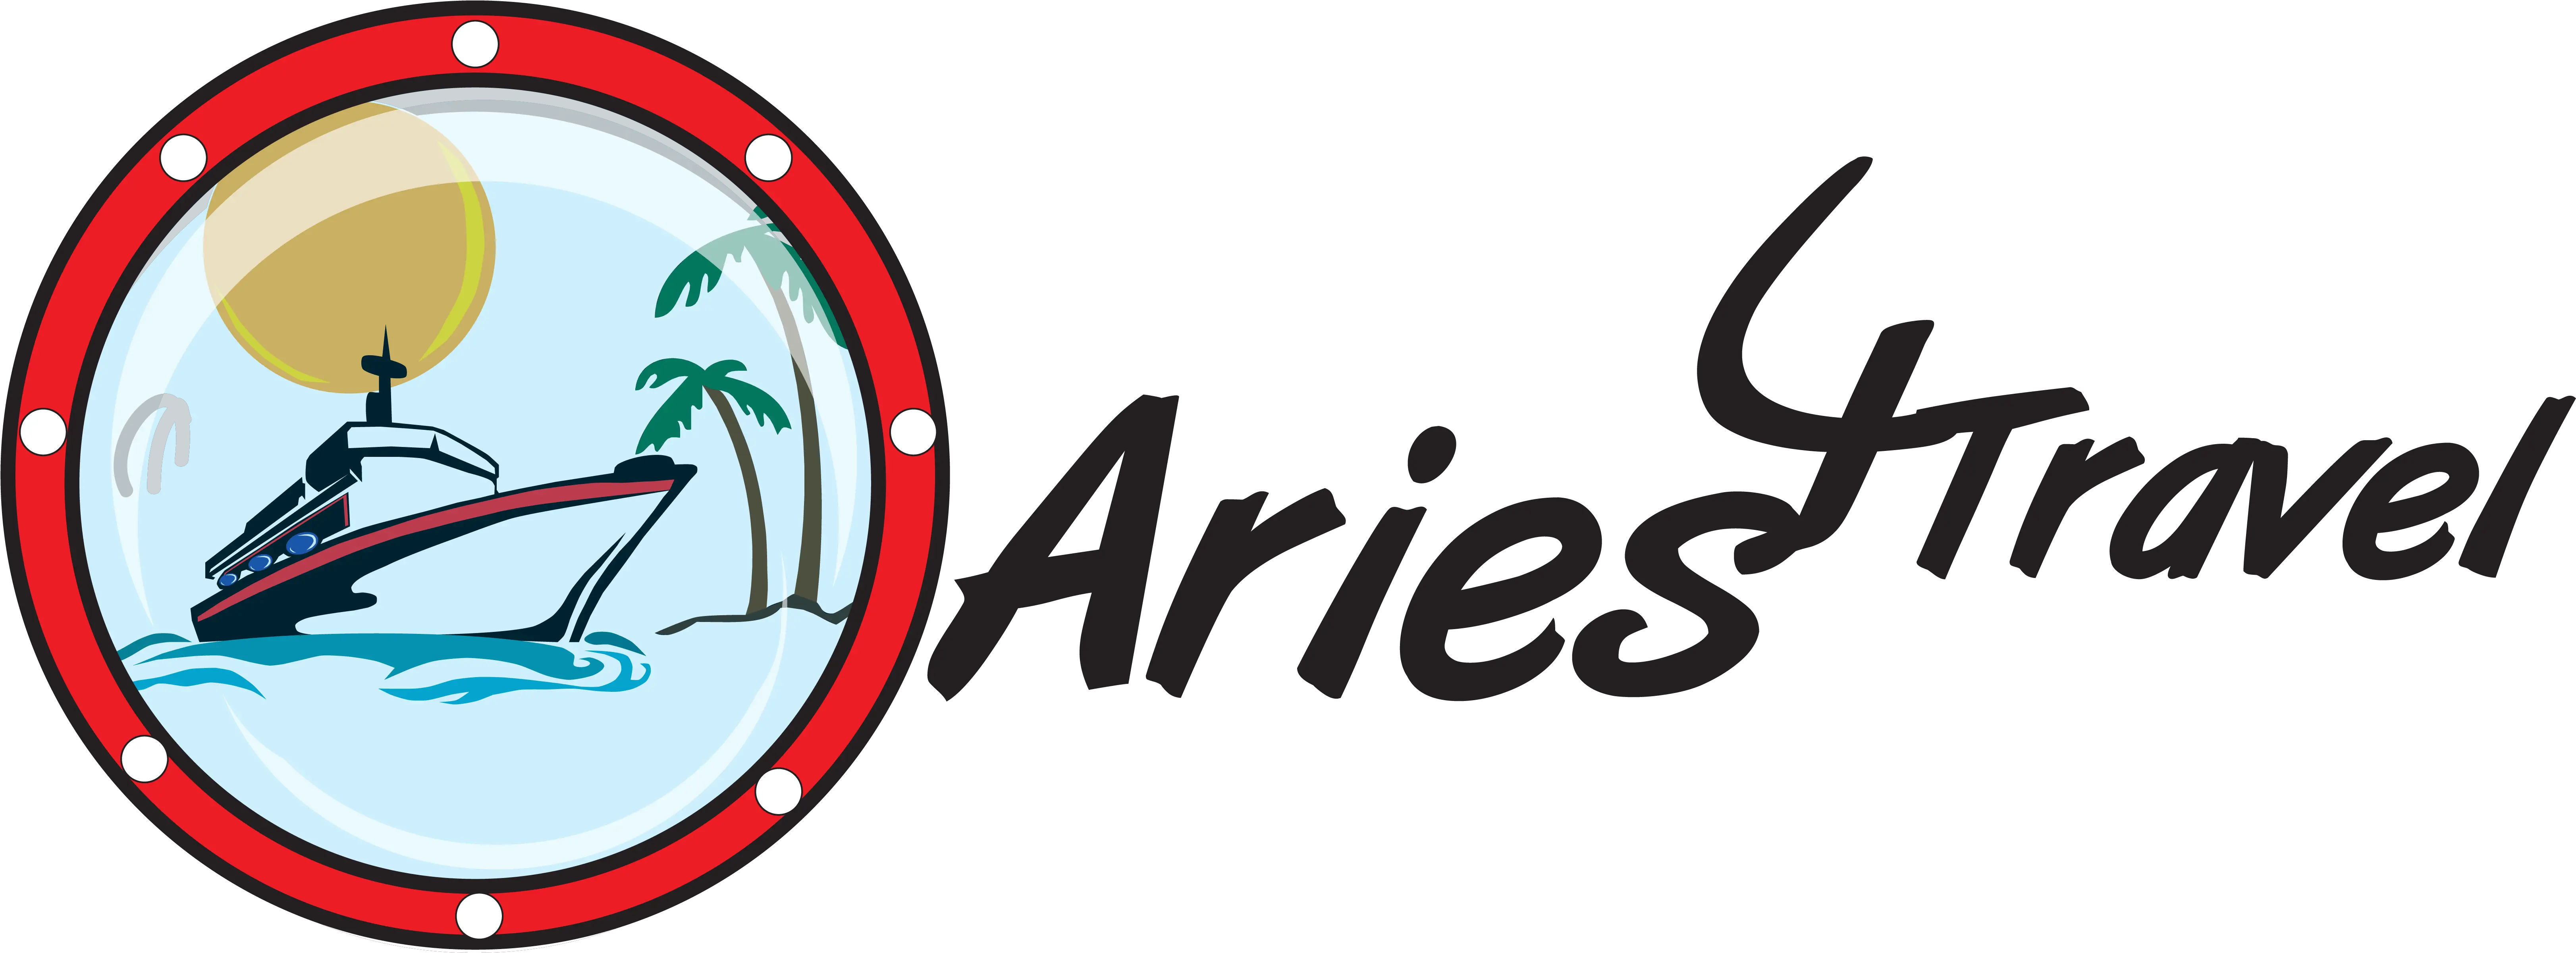 Aries 4 Travel Logos U2013 Delux Designs De Llc Red Circle Png Travel Logos